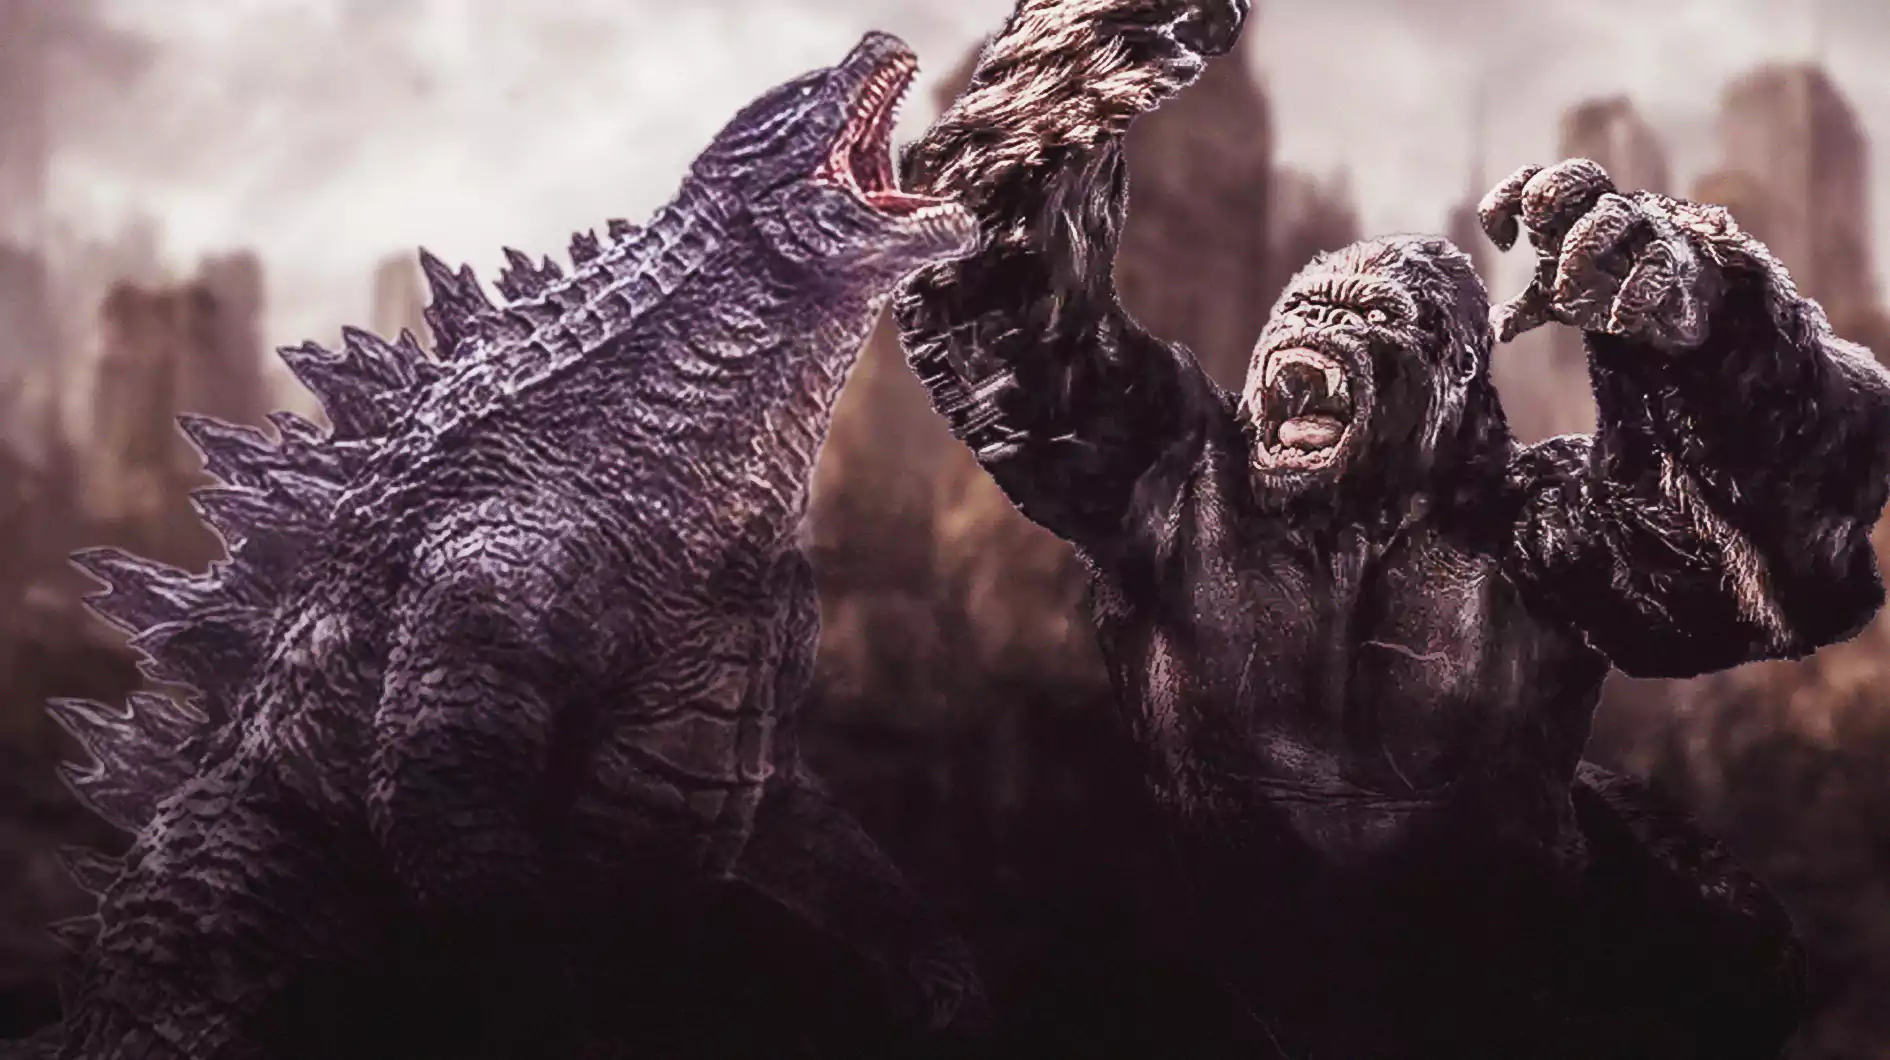 Godzilla and King Kong.